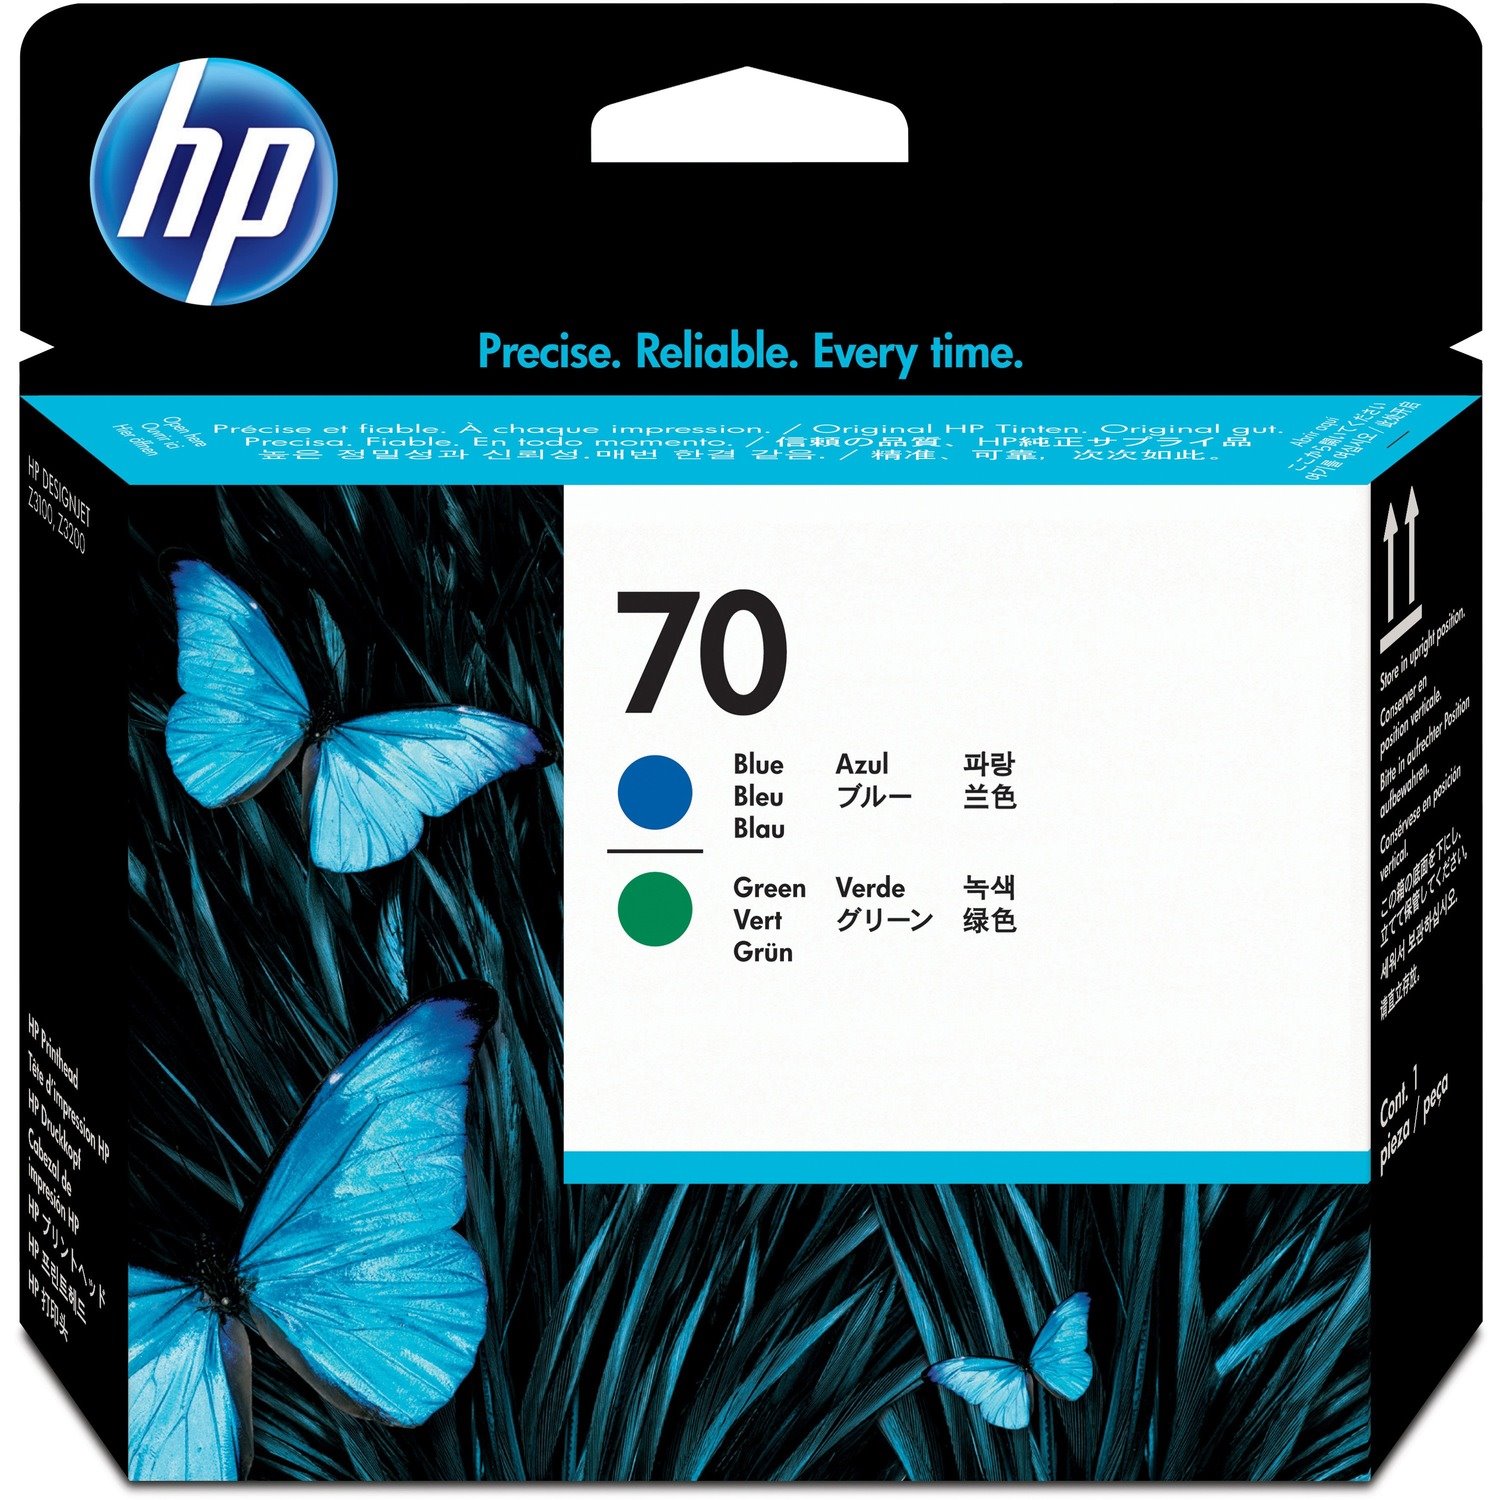 HP 70 Original Inkjet Printhead - Blue, Green - 1 Each